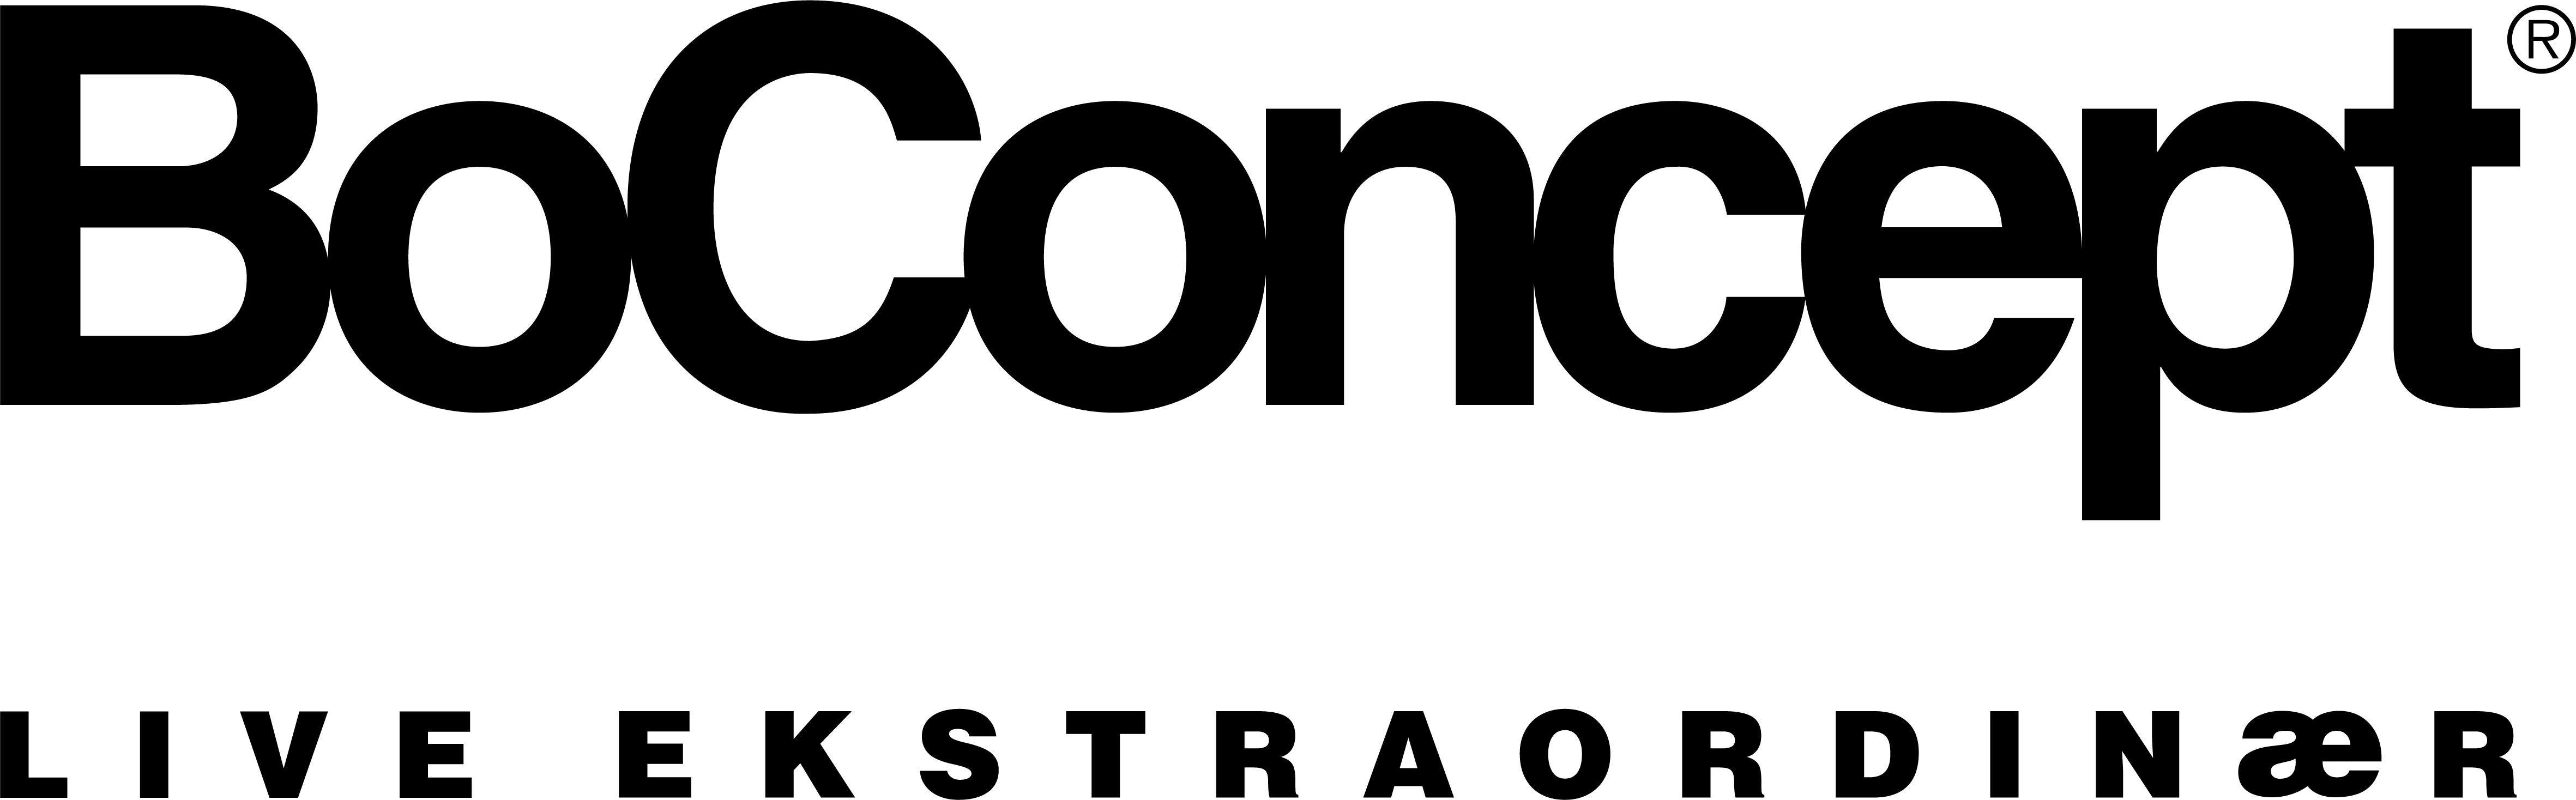 Boconcept Logo LE Black (1)